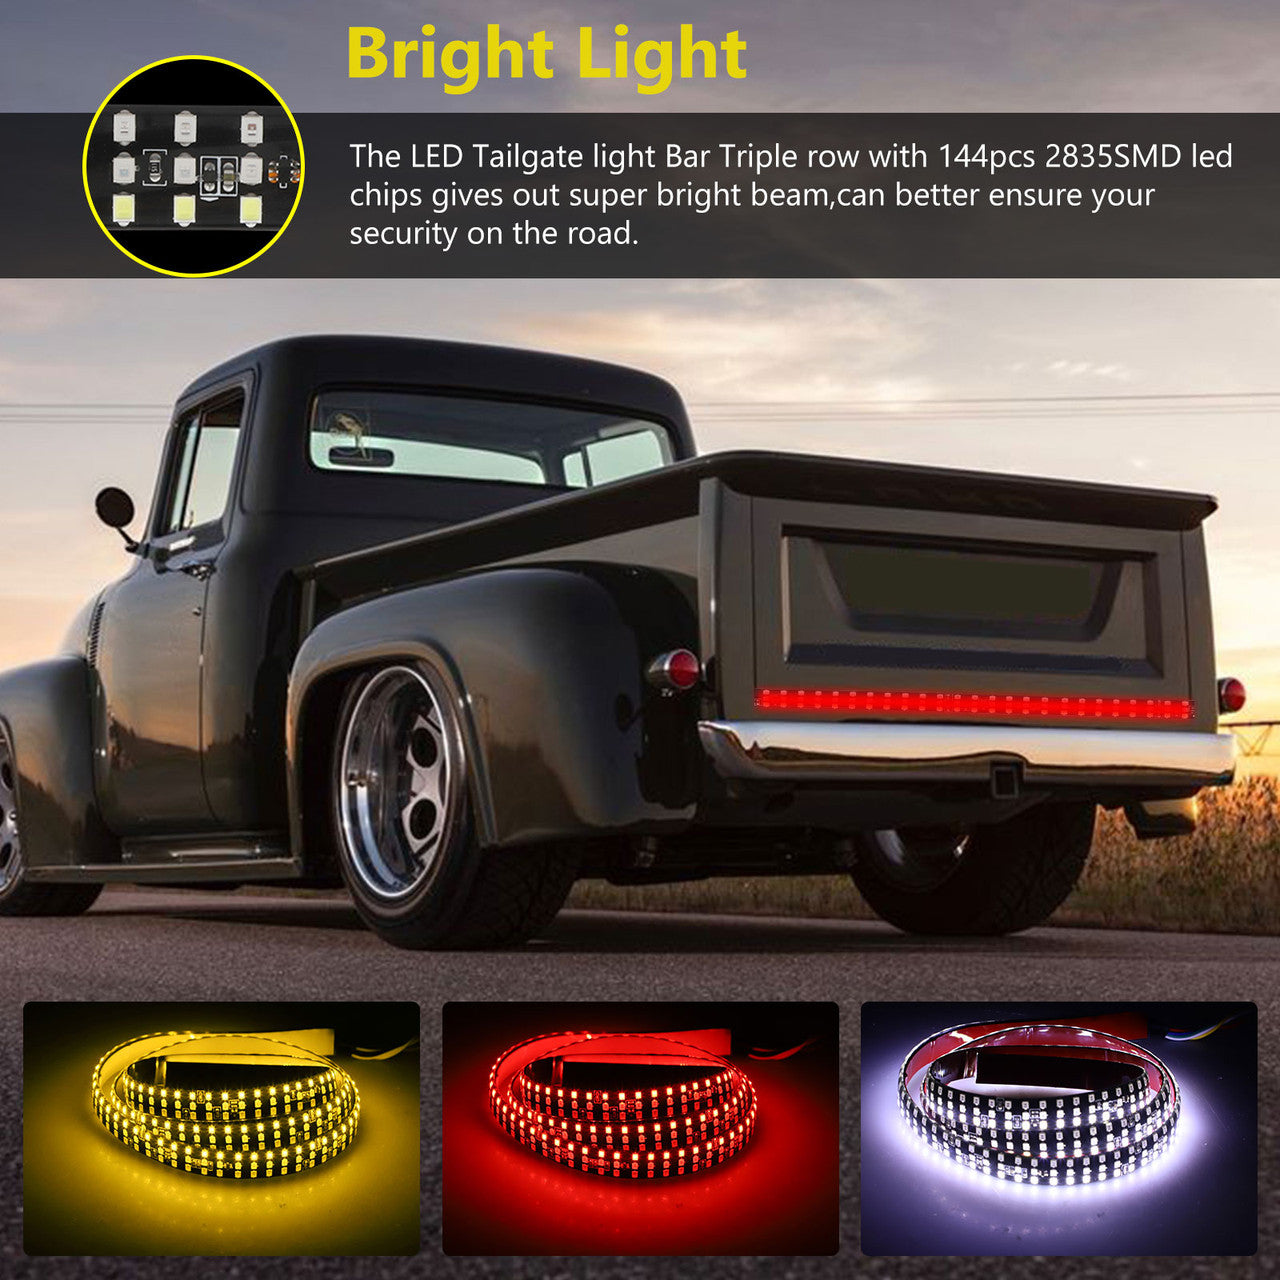 Truck Tailgate Light, 48" Triple Row 144-2835-SMD LED Brake Reverse Light Strip, IP67 Waterproof LED Auto Turning Light Bar for Van, Car, Trailer, RV